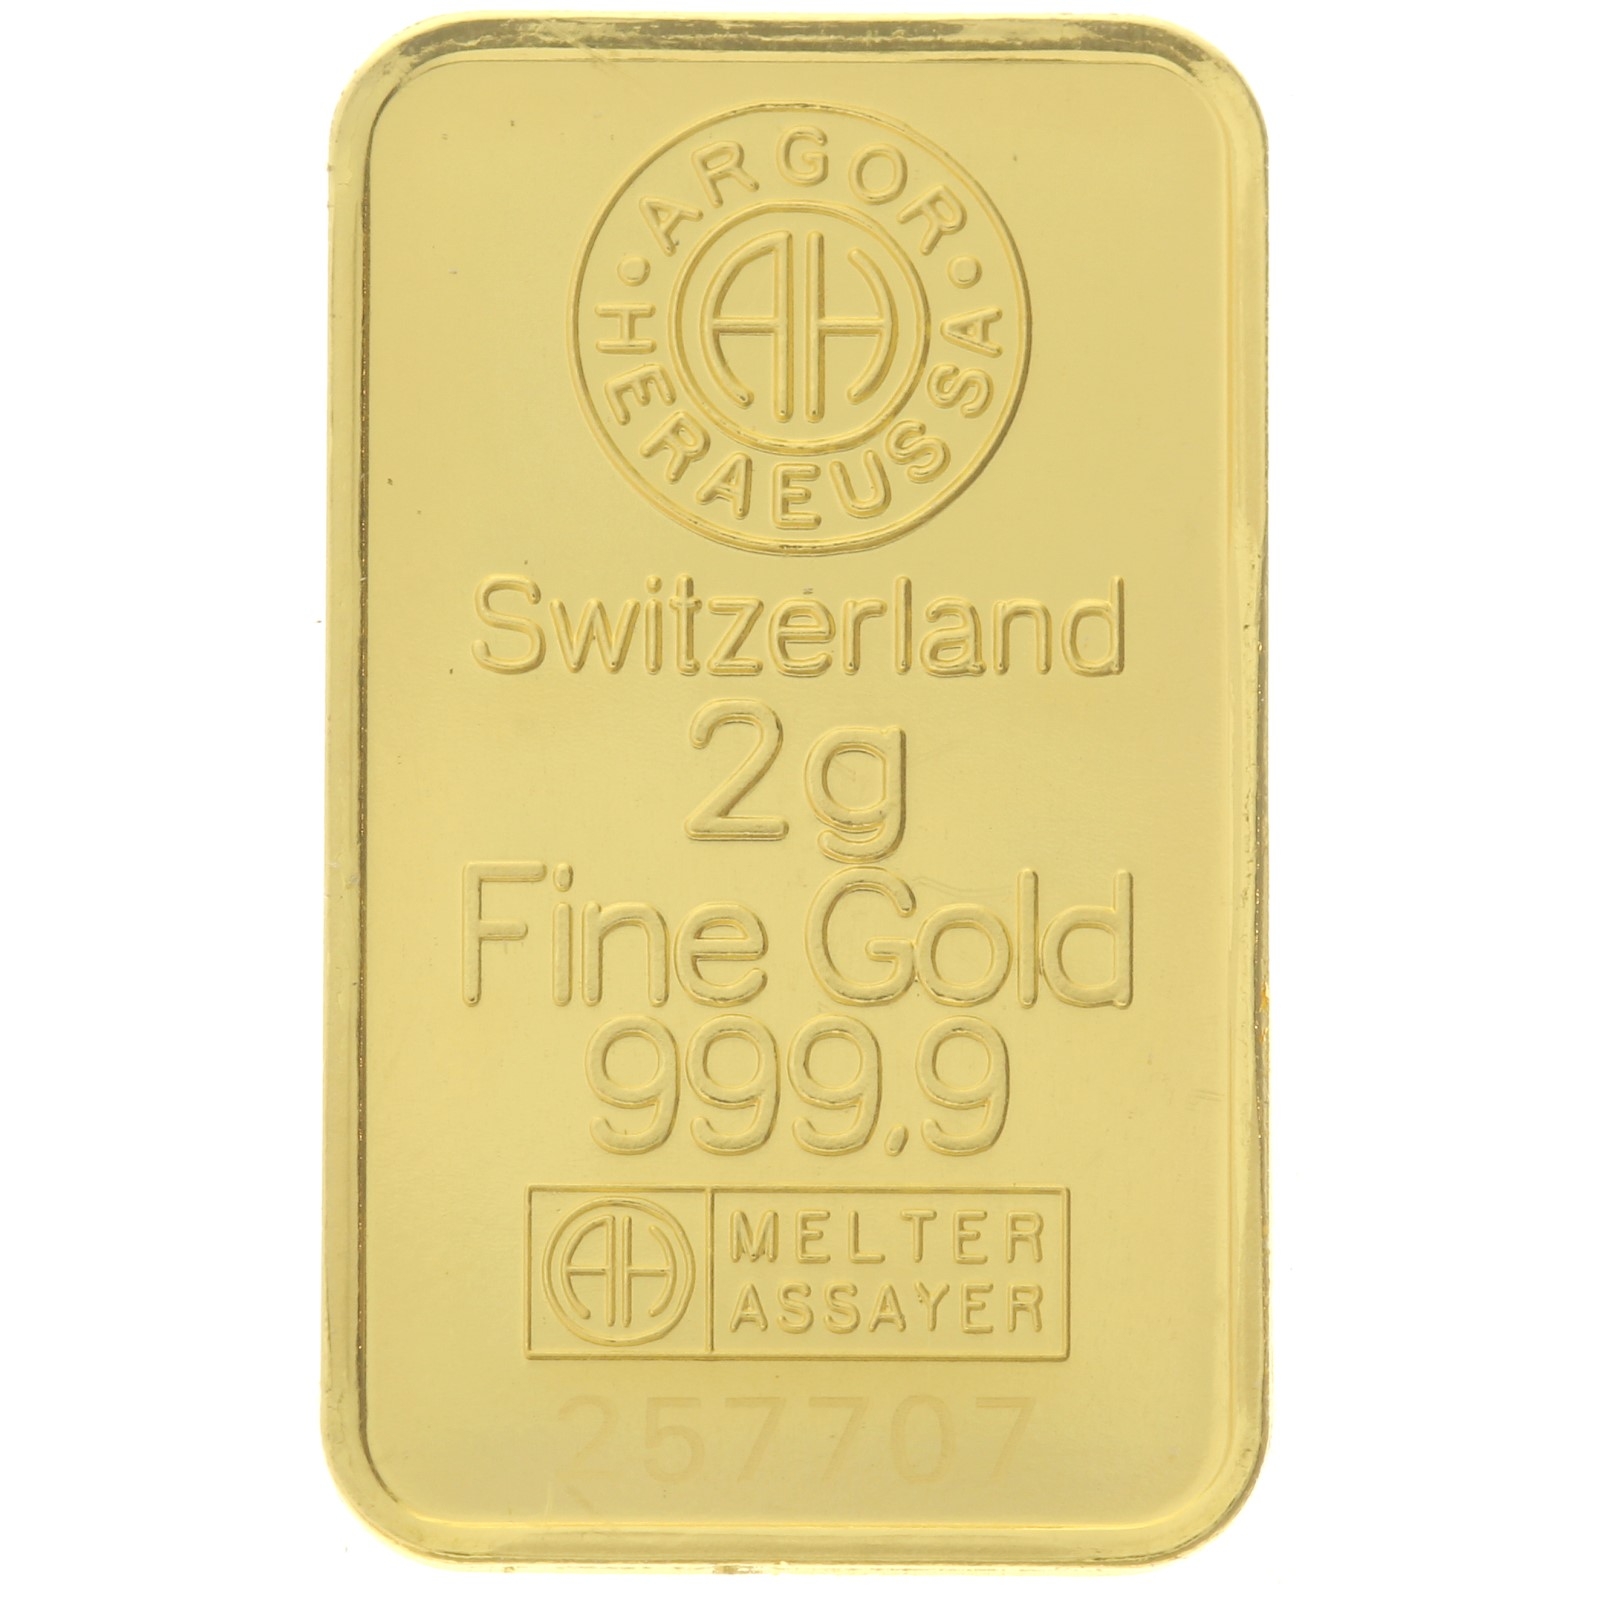 Argor-Heraeus - 2 gram fine gold - Bar 